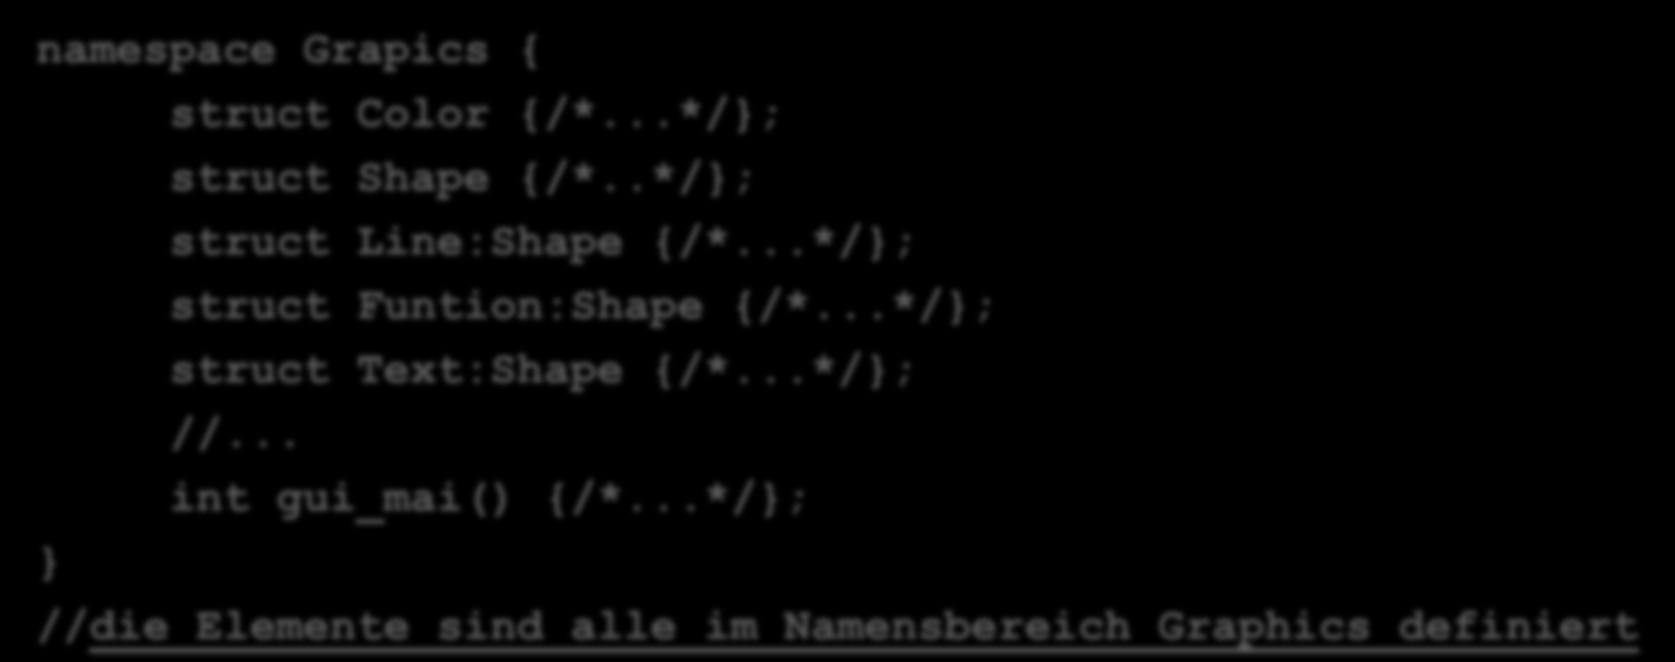 Namensbereiche - Beispiel namespace Grapics { struct Color {/*...*/; struct Shape {/*..*/; struct Line:Shape {/*...*/; struct Funtion:Shape {/*.